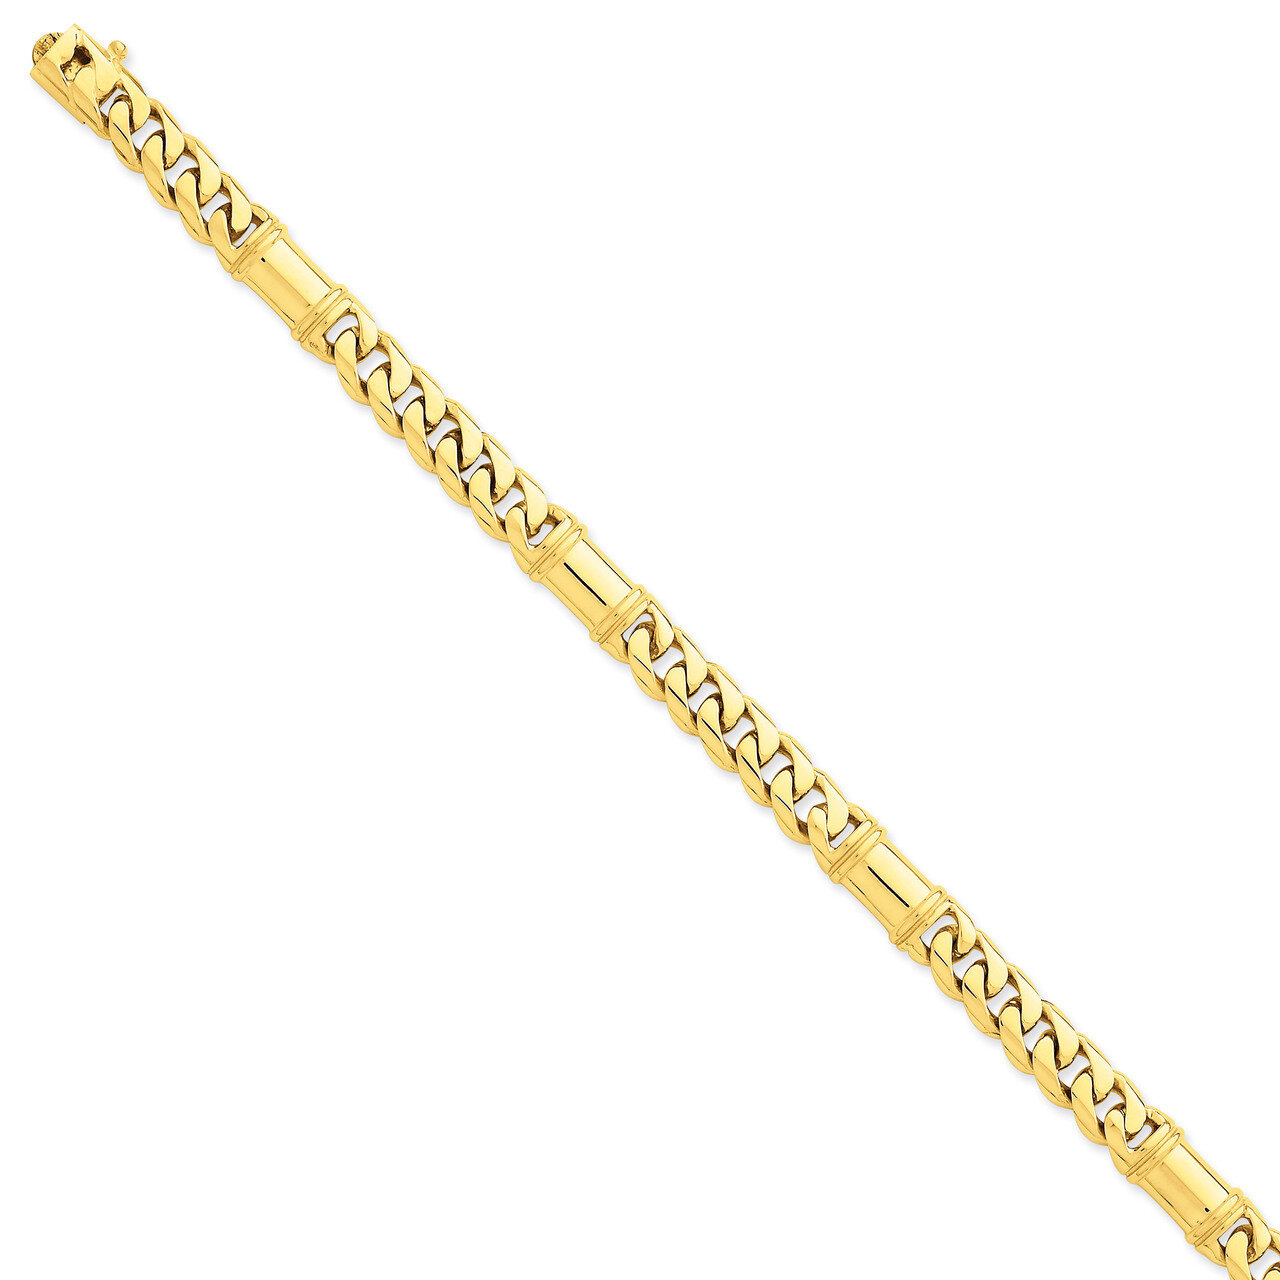 7.5mm Hand-Polished Fancy Link Chain 22 Inch 14k Gold LK187-22